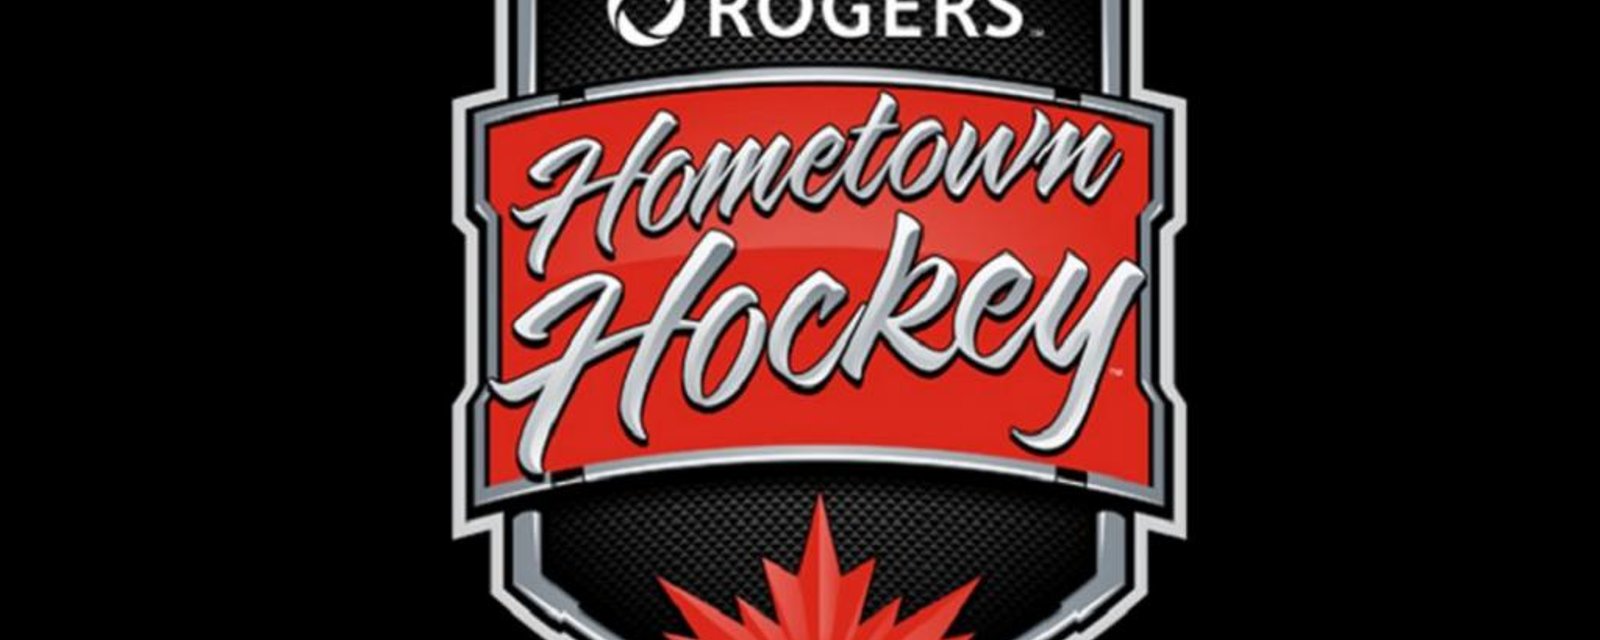 Rogers Hometown Hockey the latest victim of Coronavirus fears